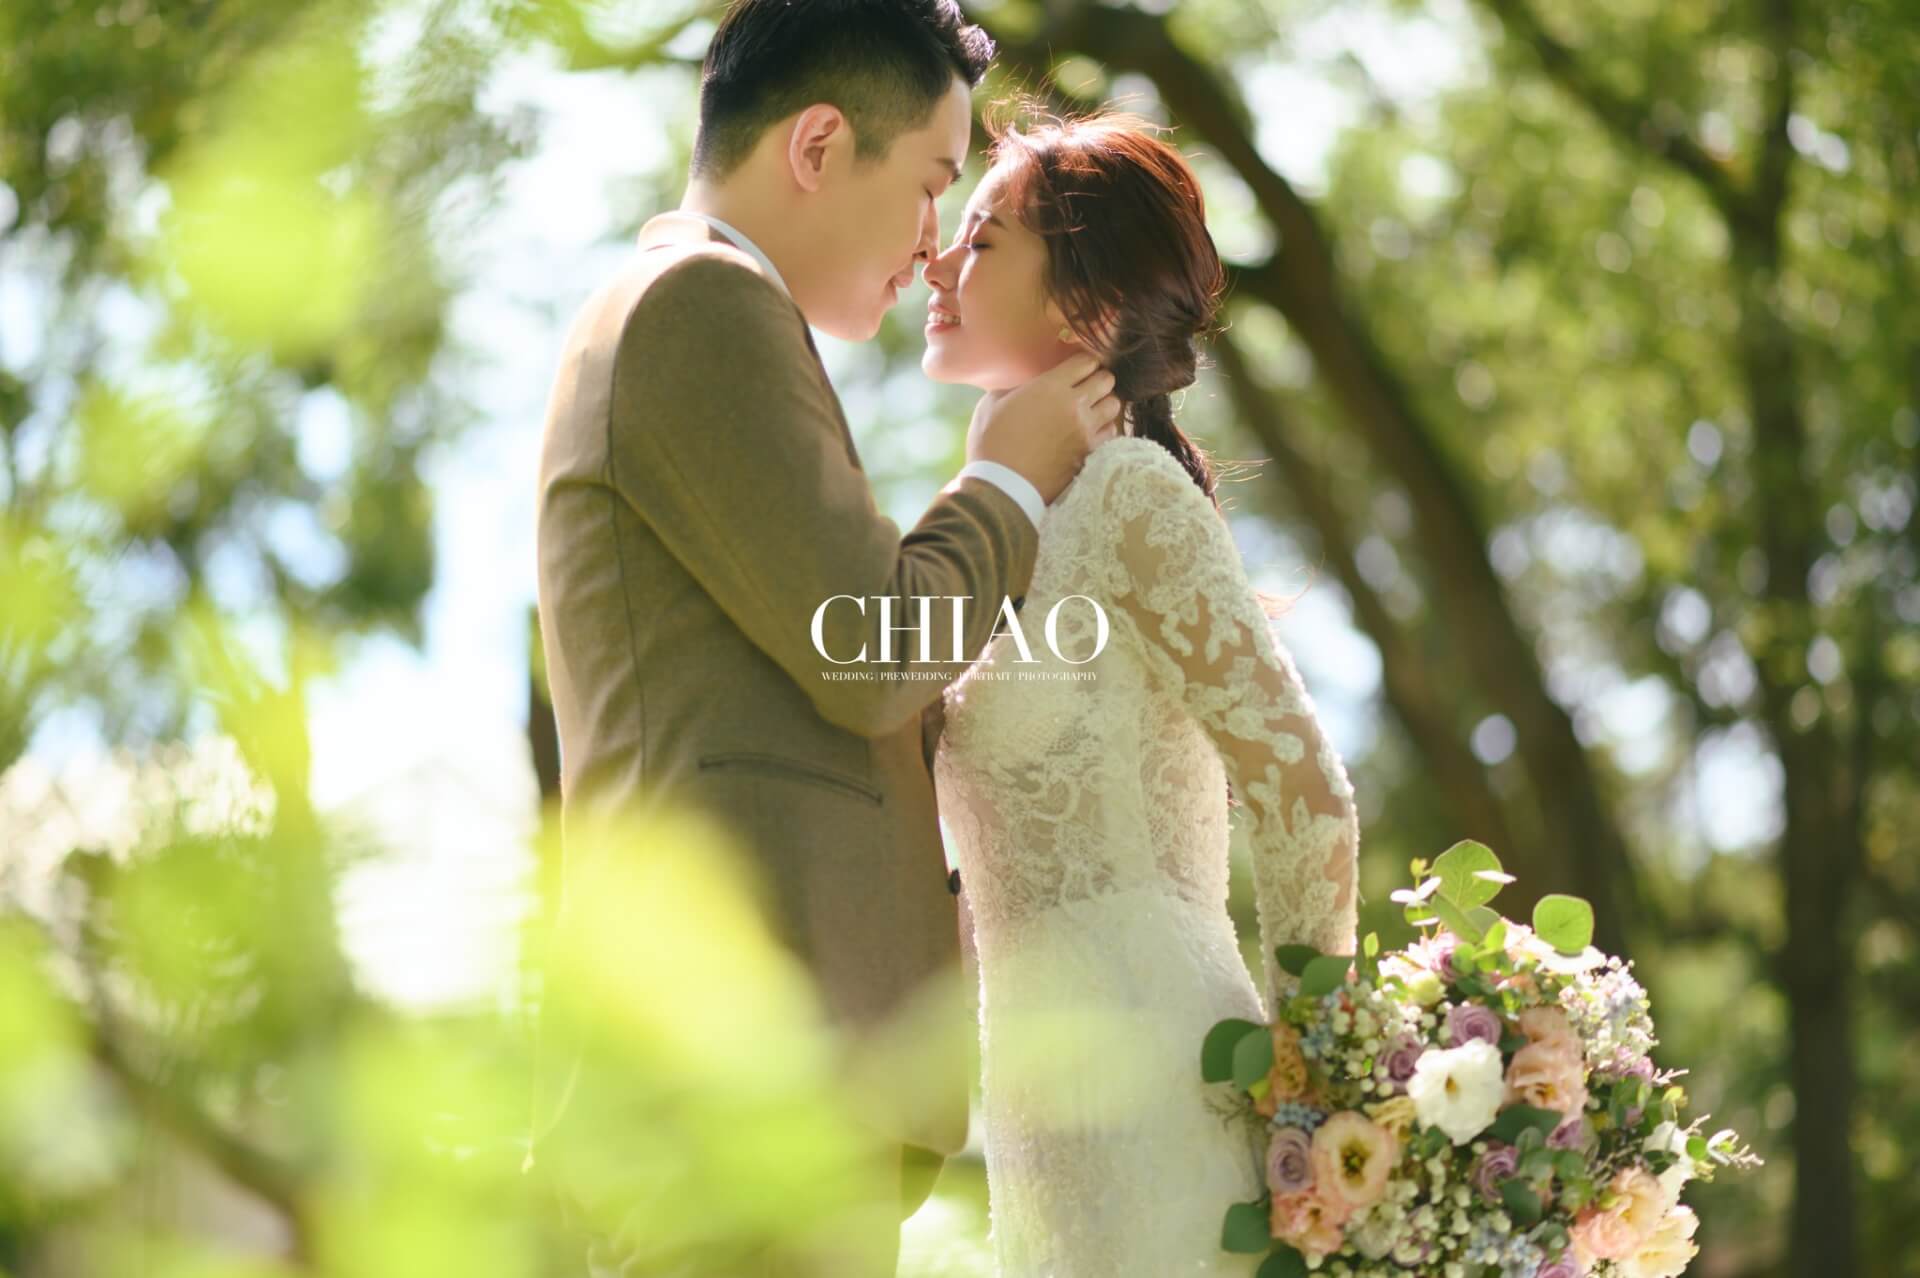 CHIAO Photo / 紫涵 婚紗照分享